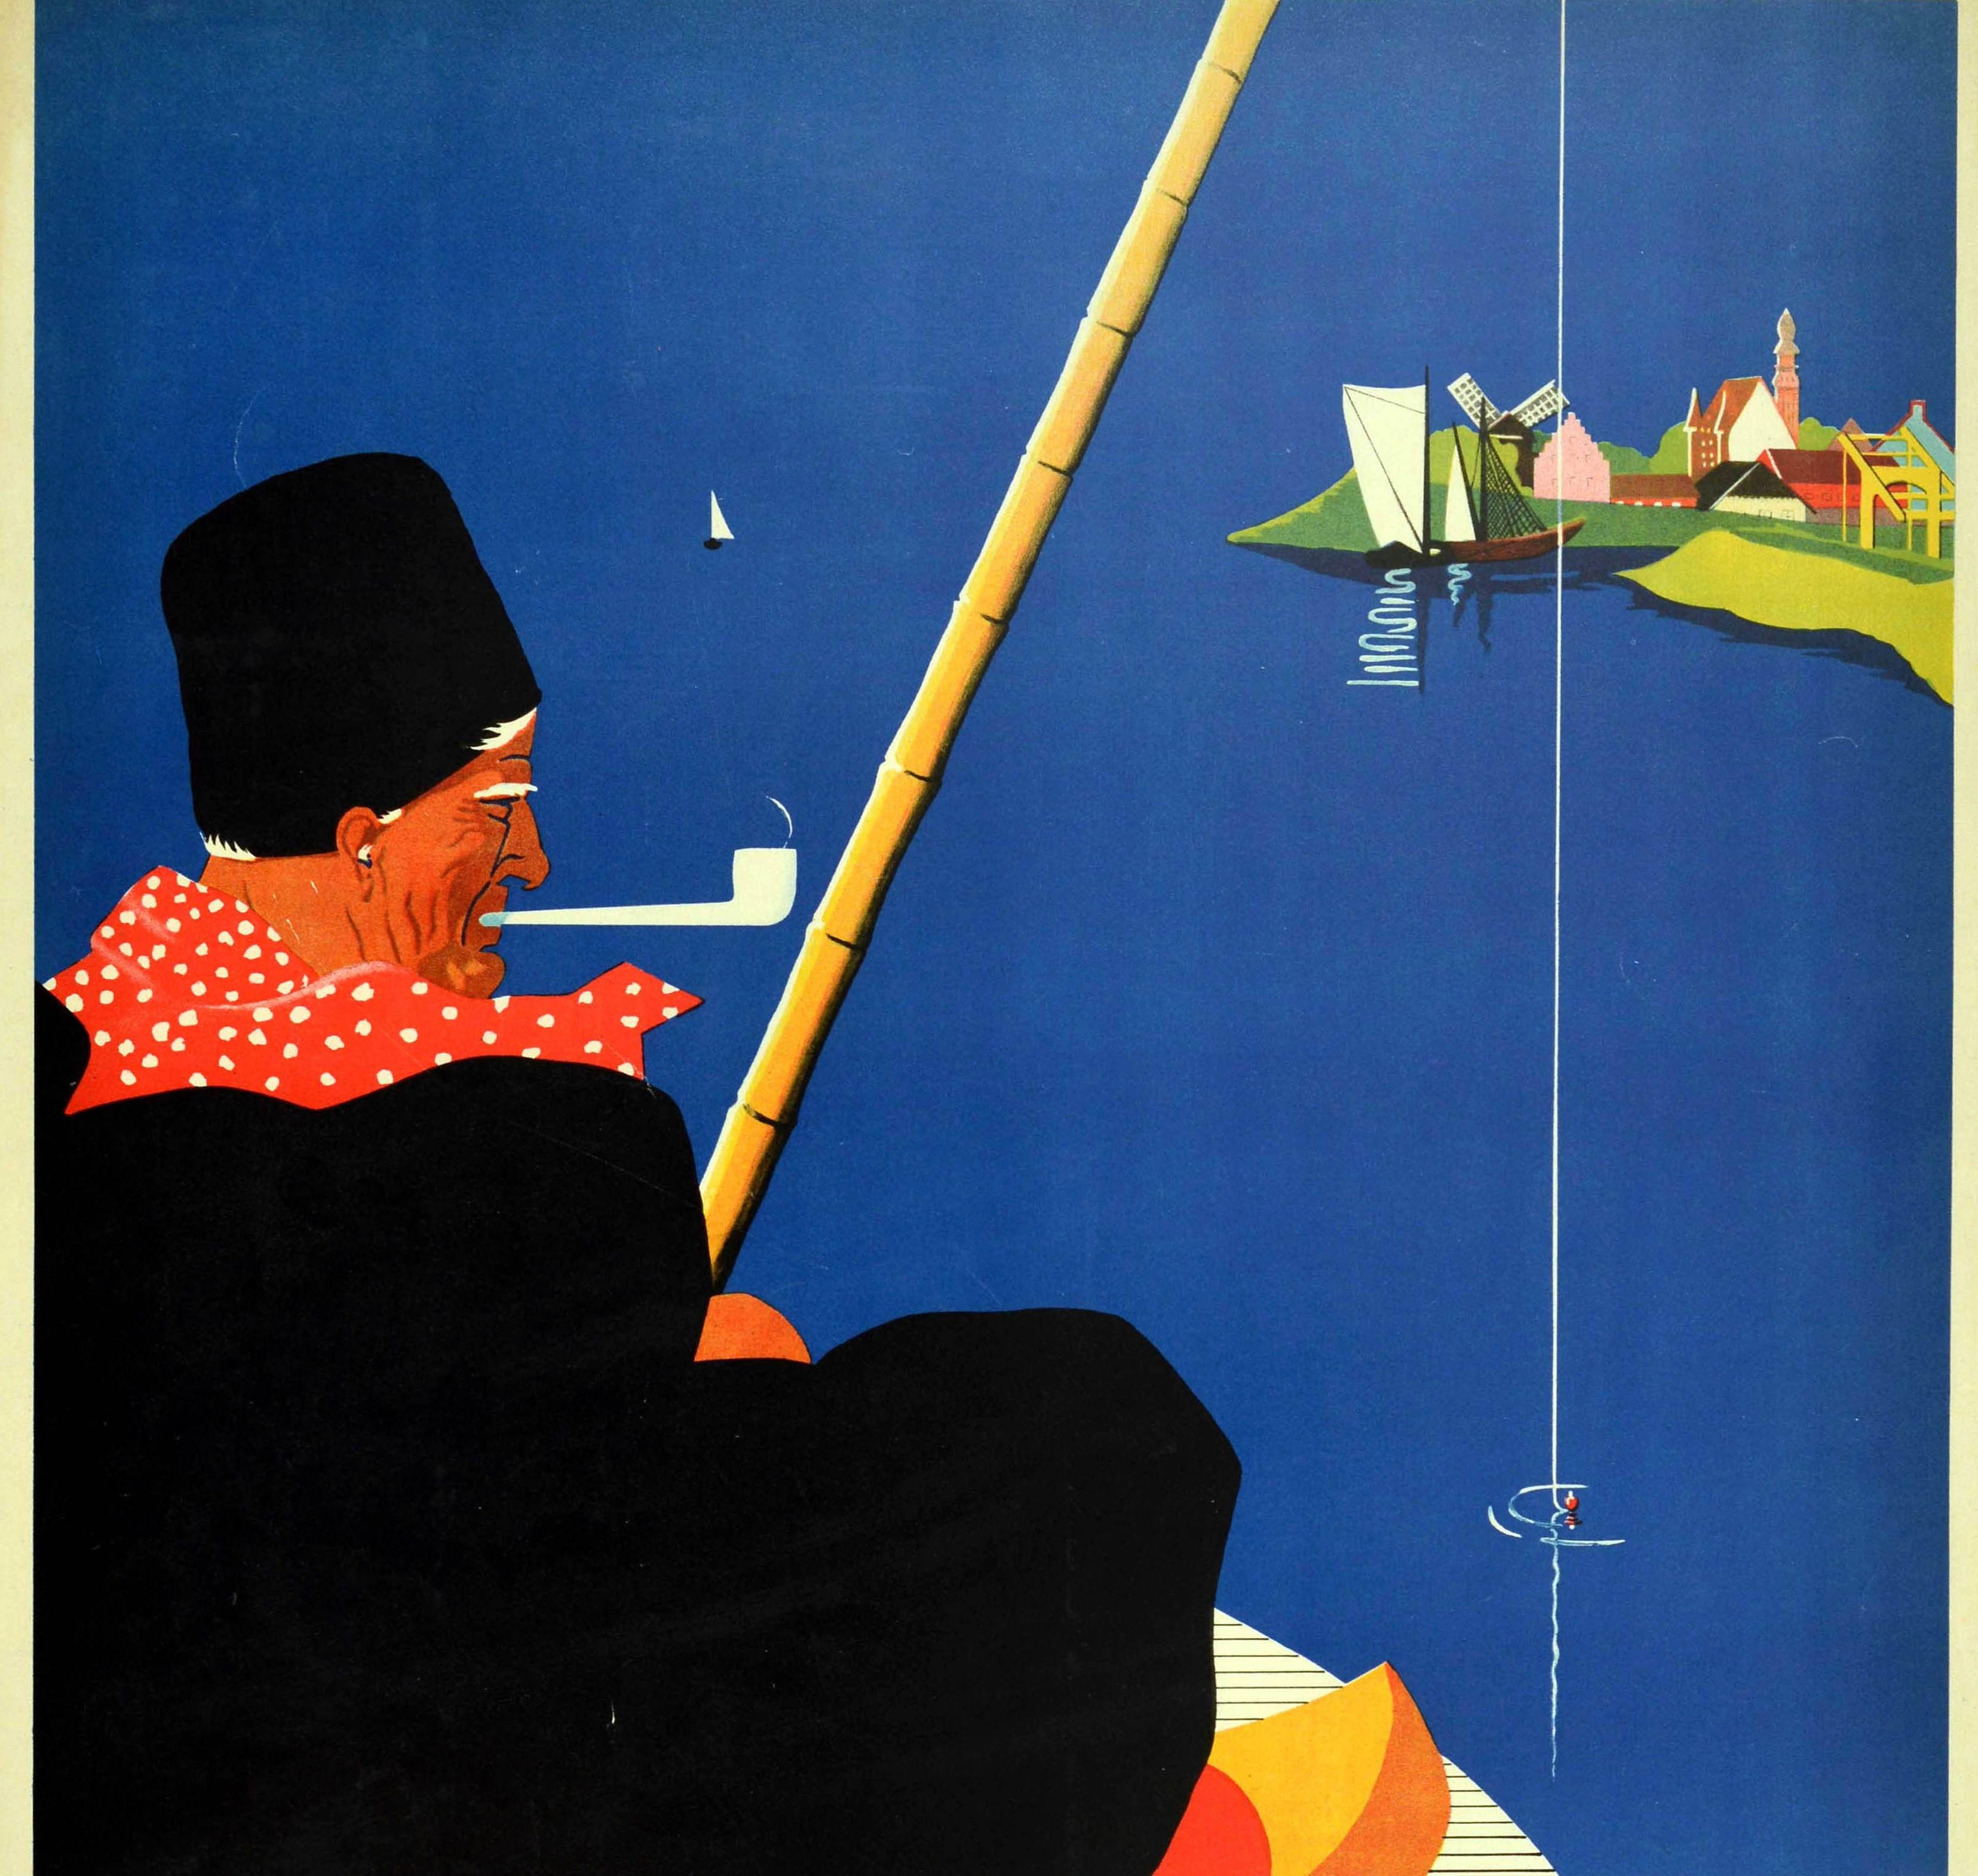 Original Vintage Travel Poster For Holland Fisherman Windmill Sailing Boats Art - Print by H. Molenaar